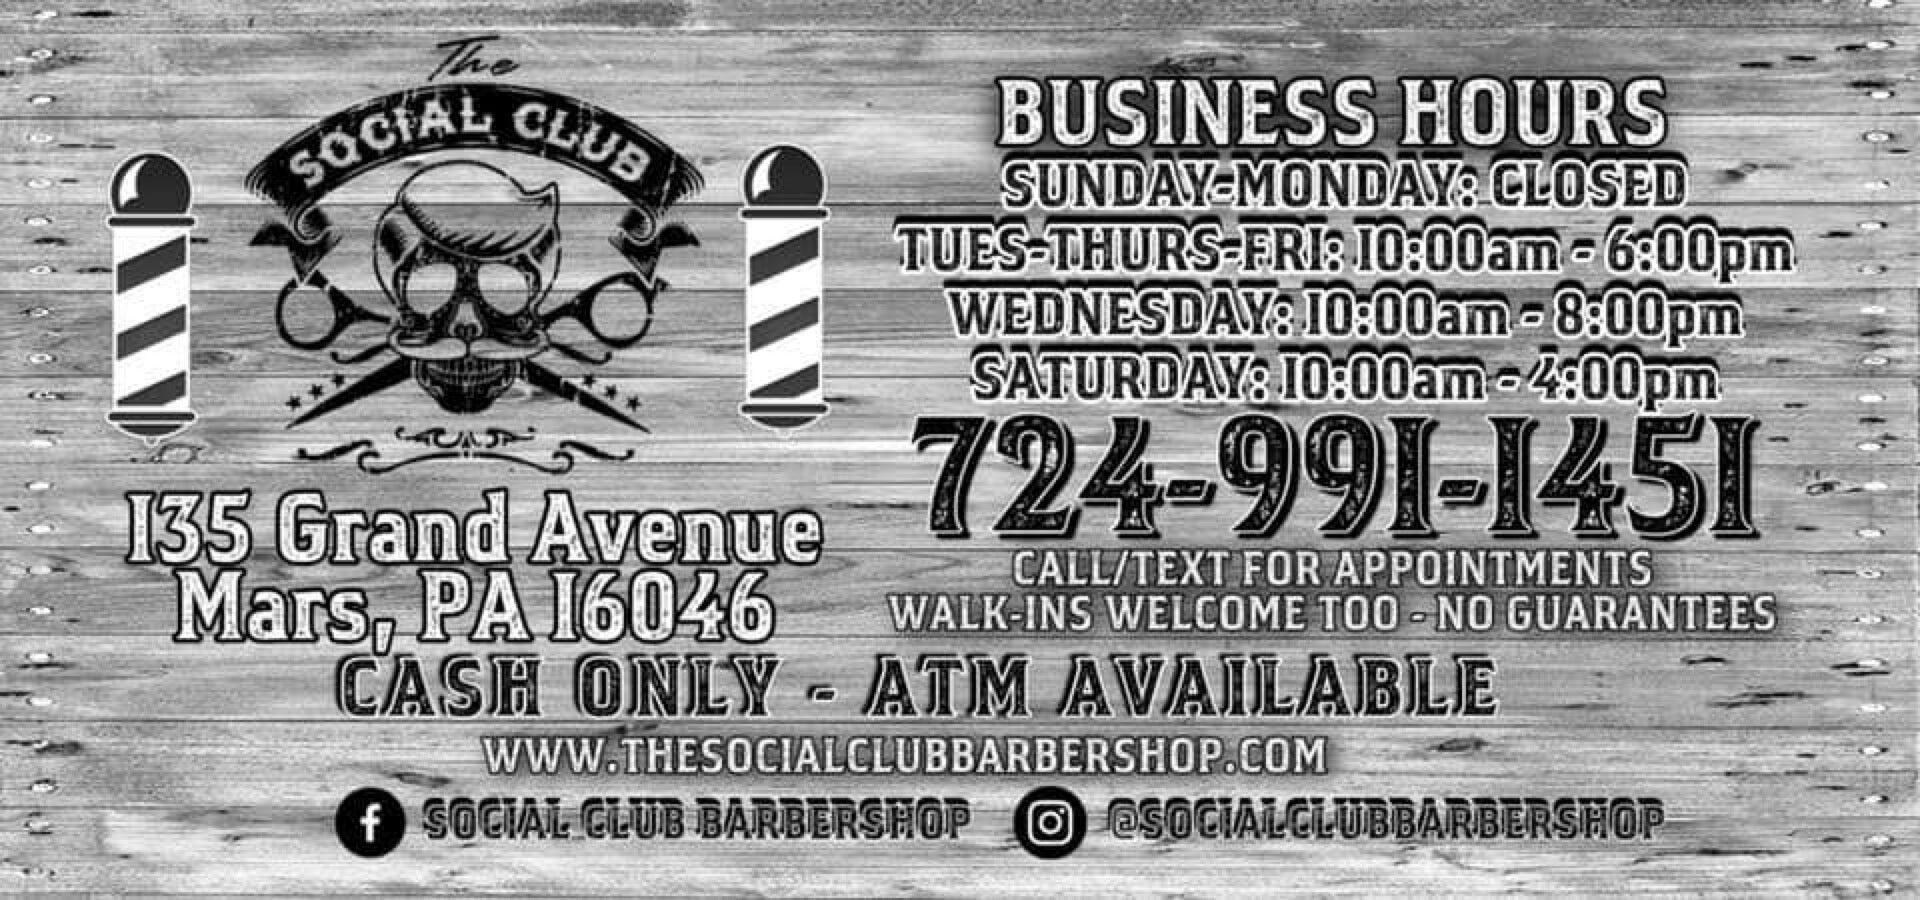 Social Club Barbershop 135 Grand Ave, Mars Pennsylvania 16046